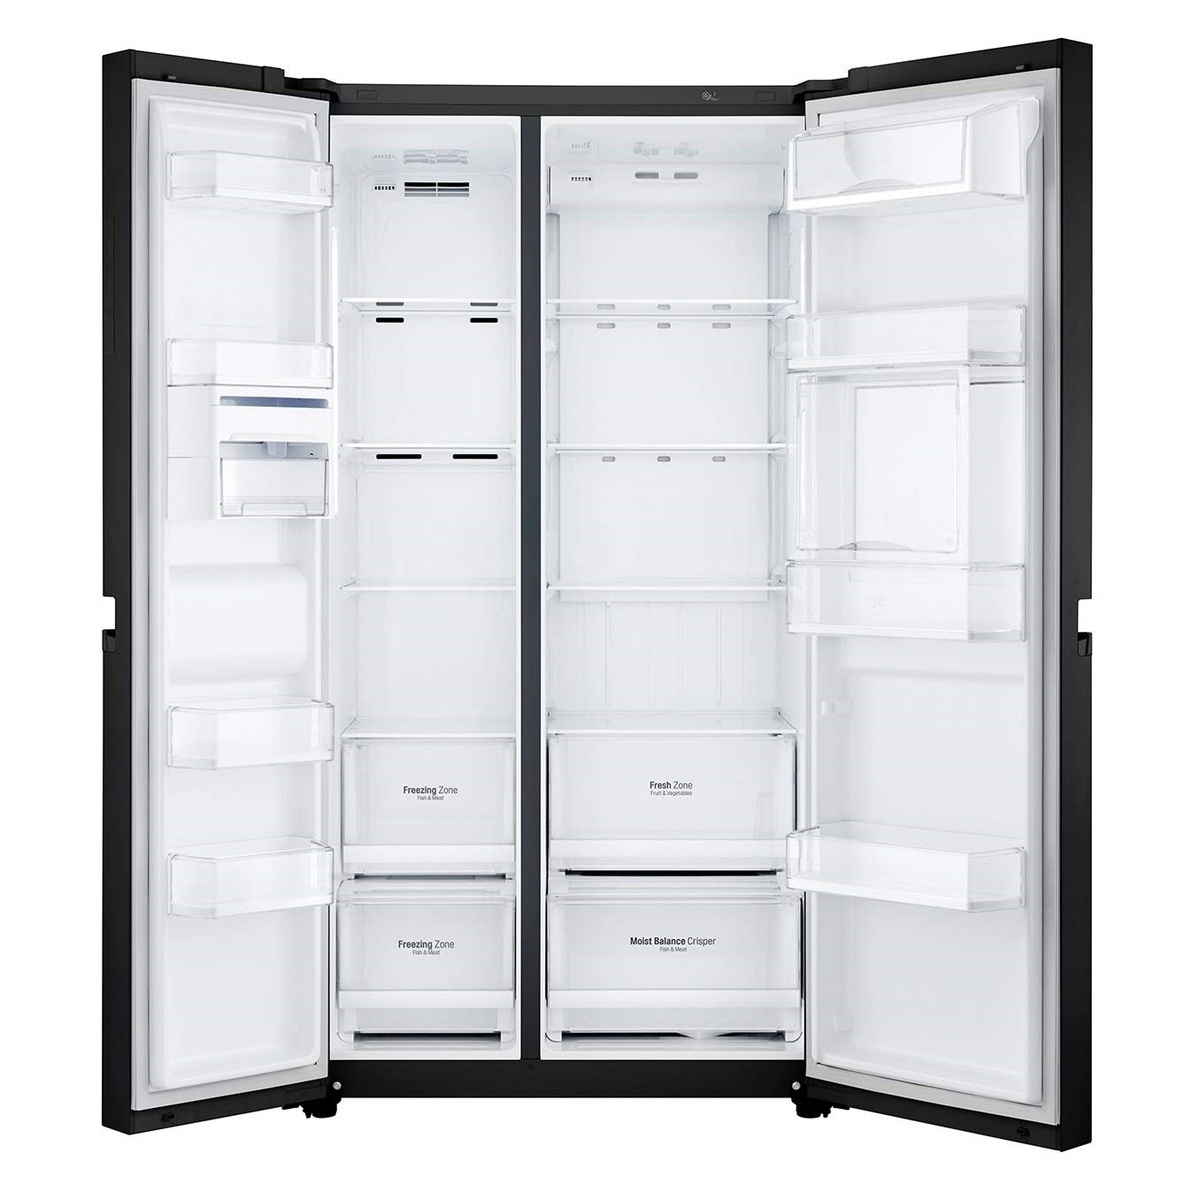 LG Side-By-Side Refrigerator GC-C247UGBM Black 675Ltr